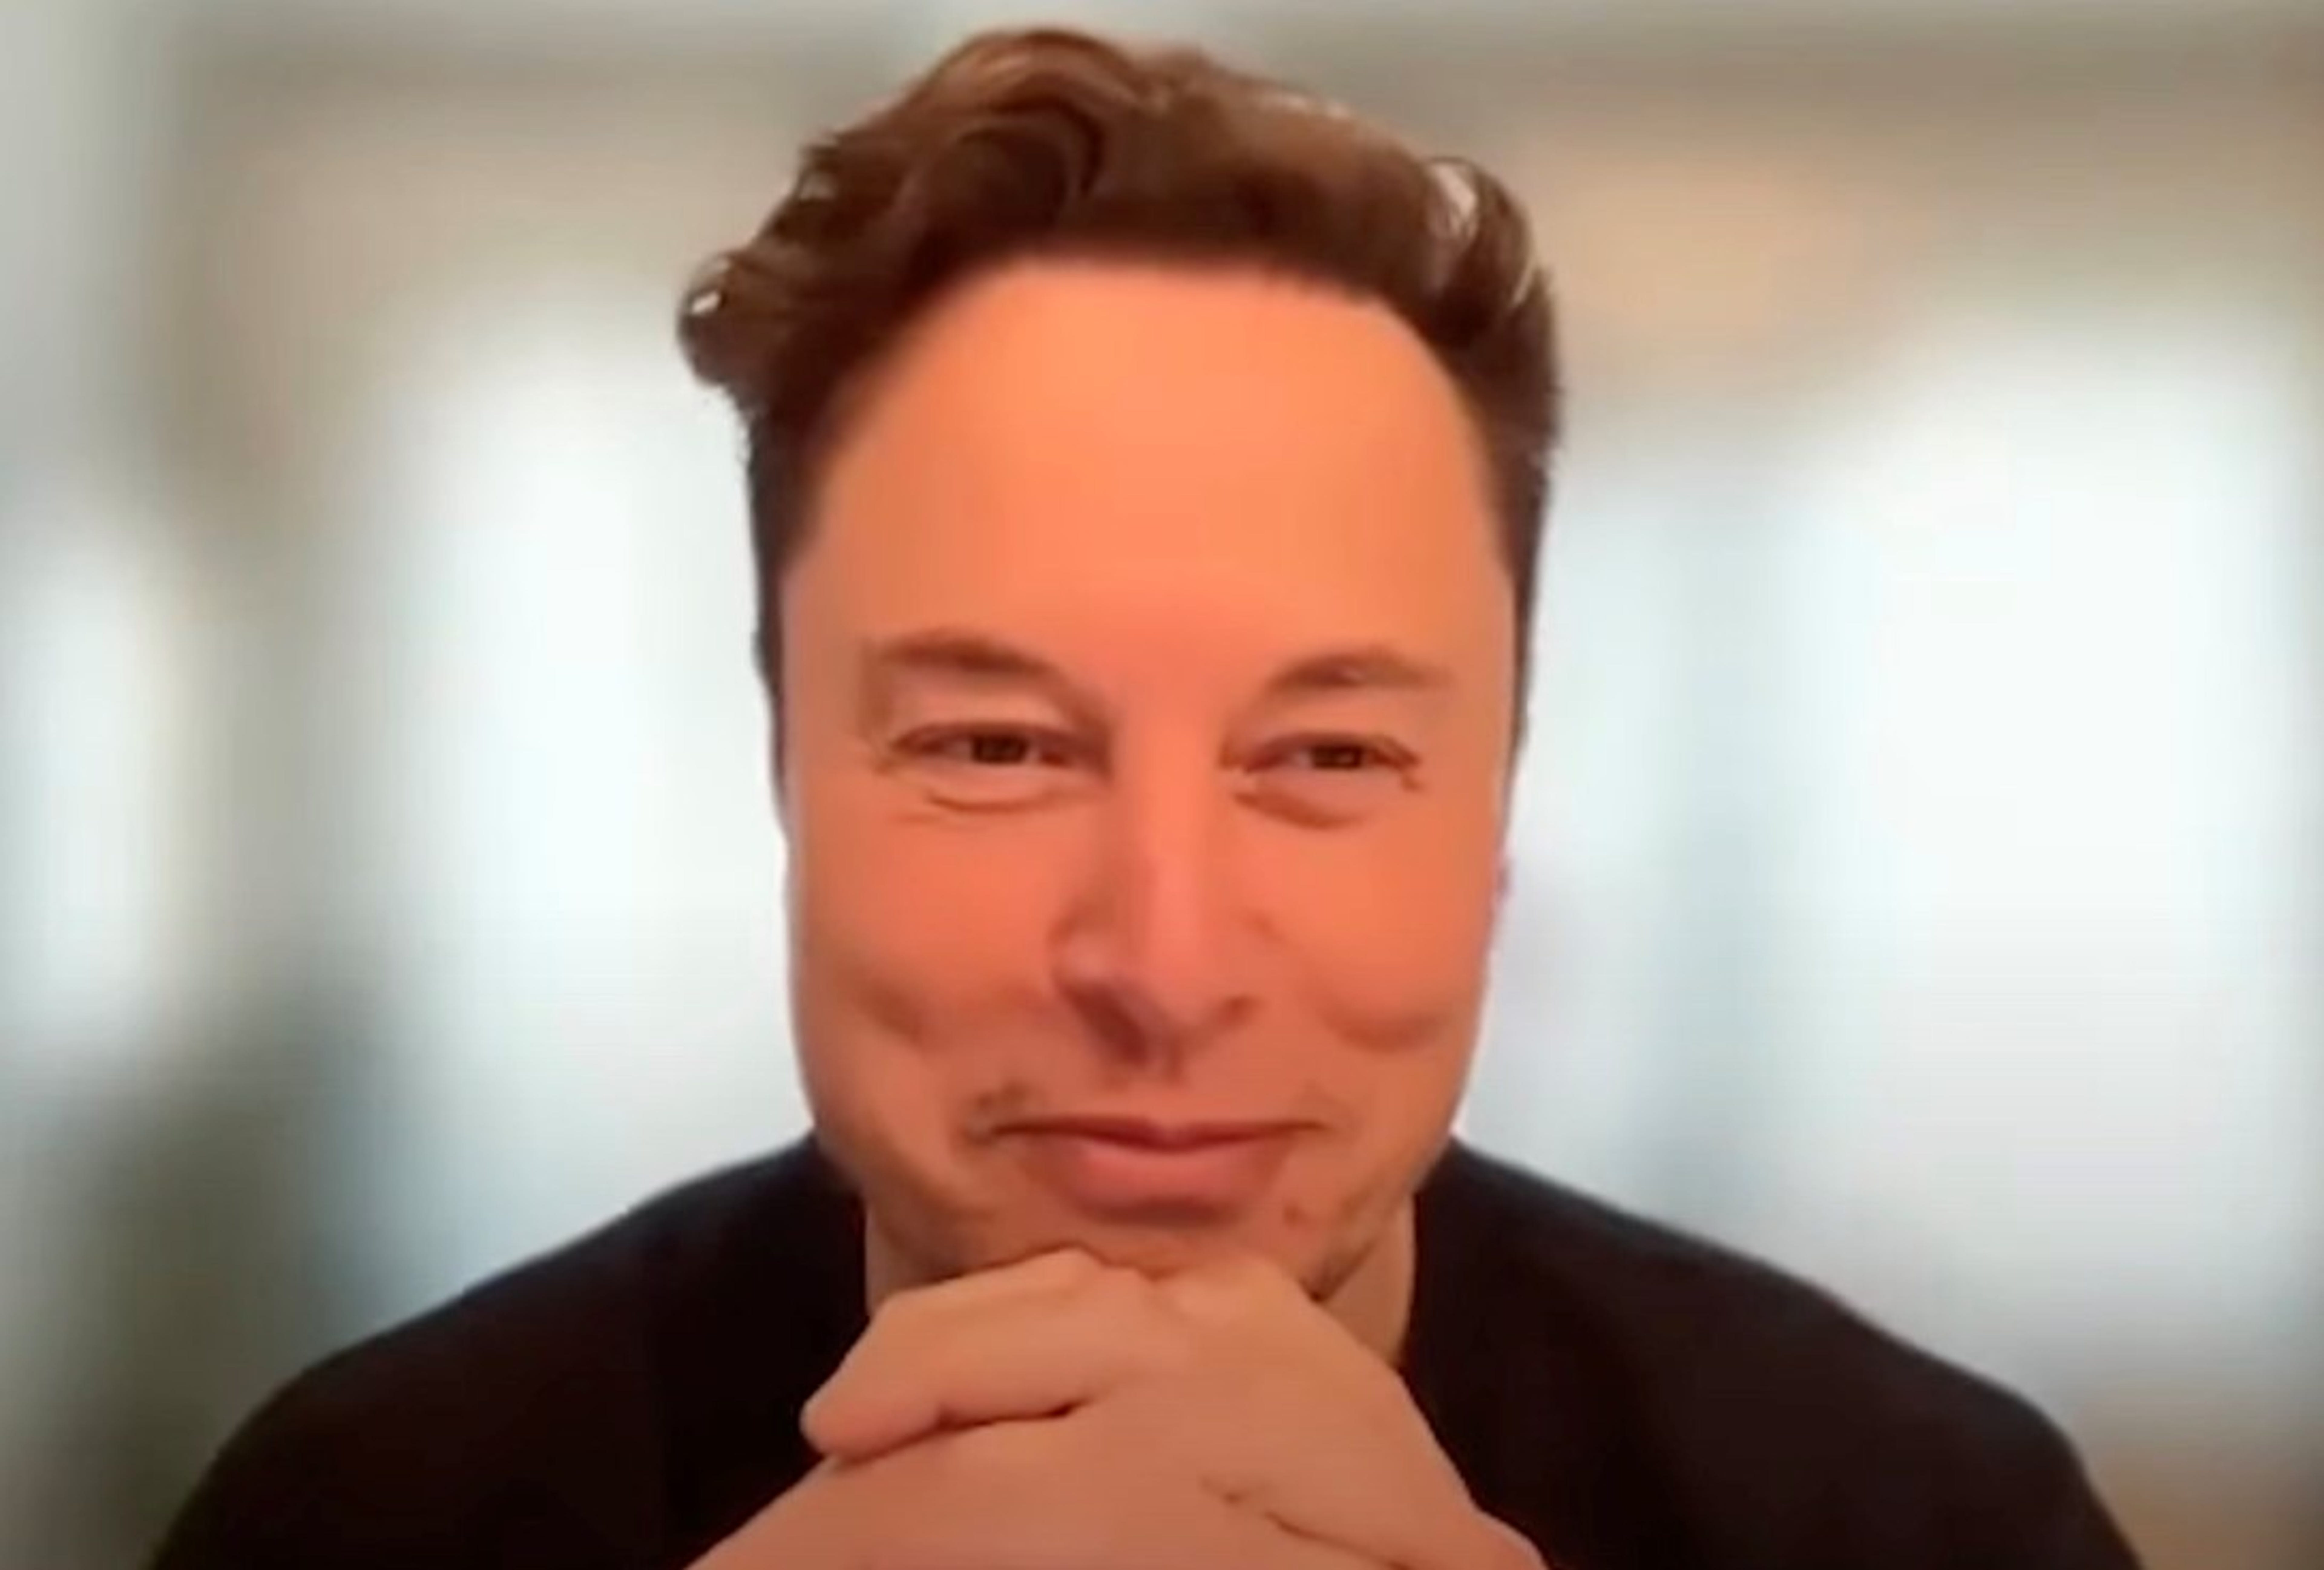 Analysis: Elon Musk In The 2022 Media